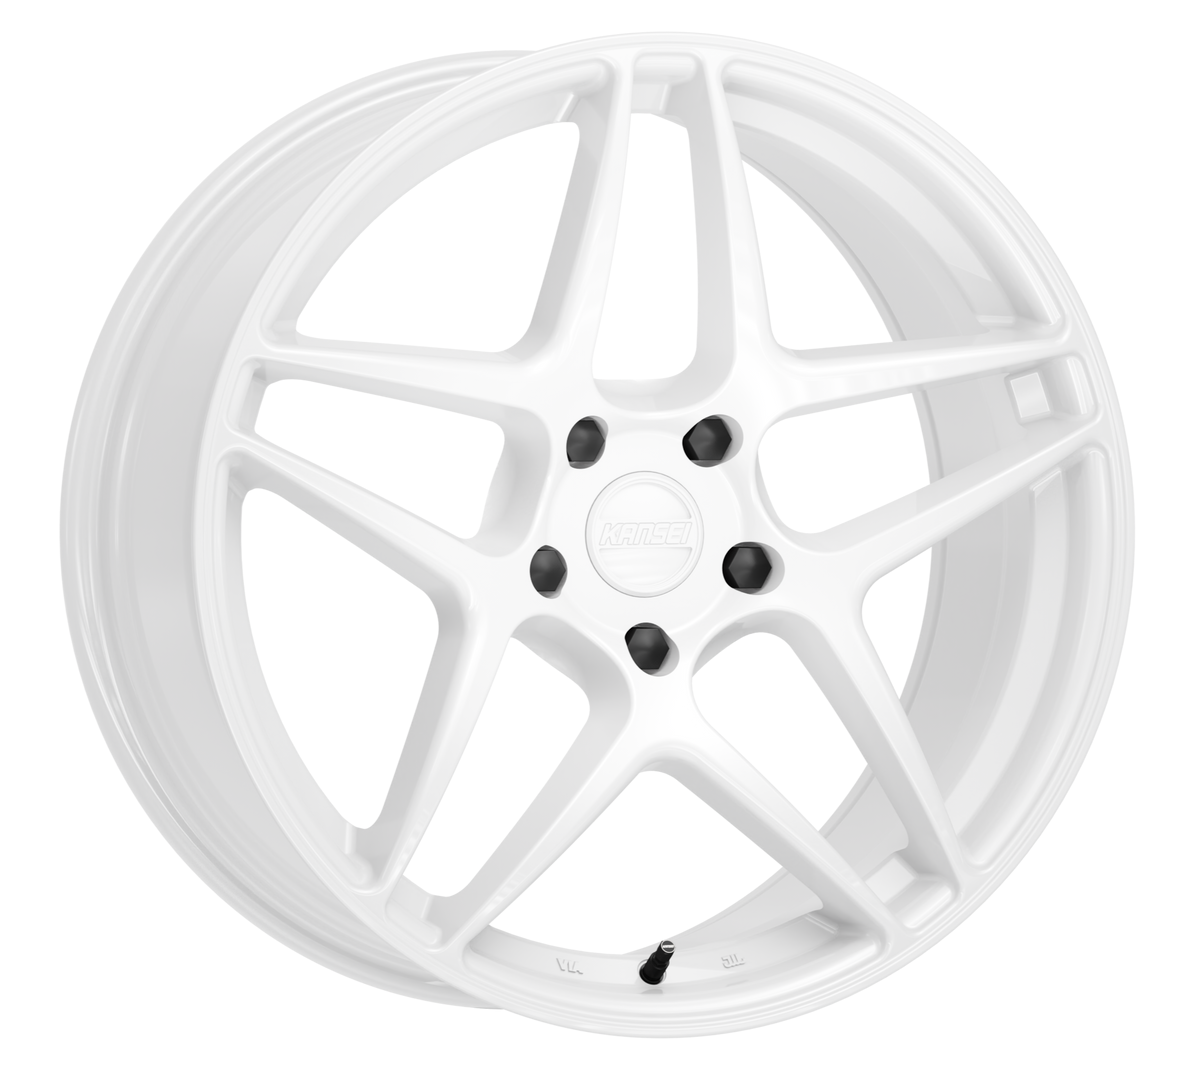 K15W ASTRO Wheel, Size: 18" x 9.50", Bolt Pattern: 5 x 114.300 mm, Backspace: 6.12" [Finish: Gloss White]